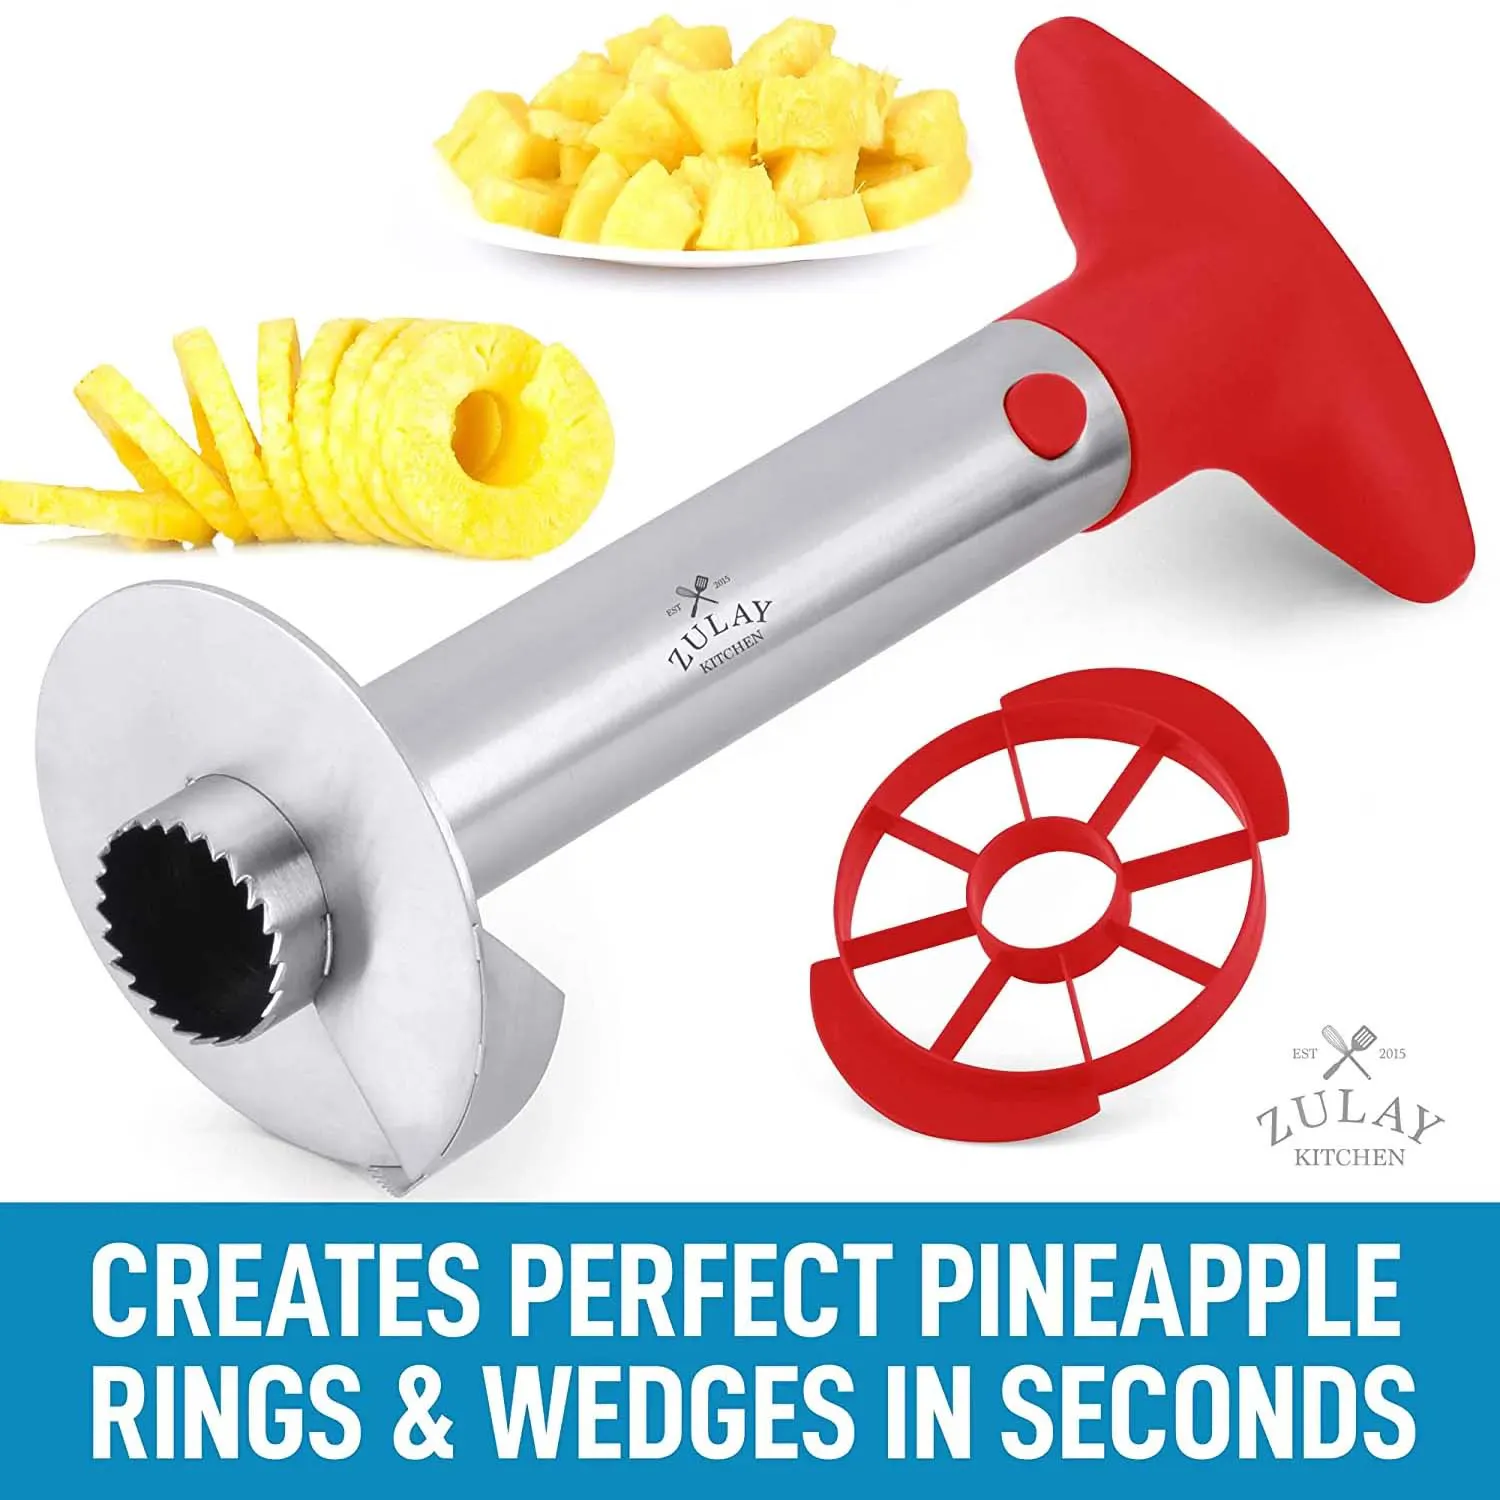 Pineapple Corer And Slicer Tool Set